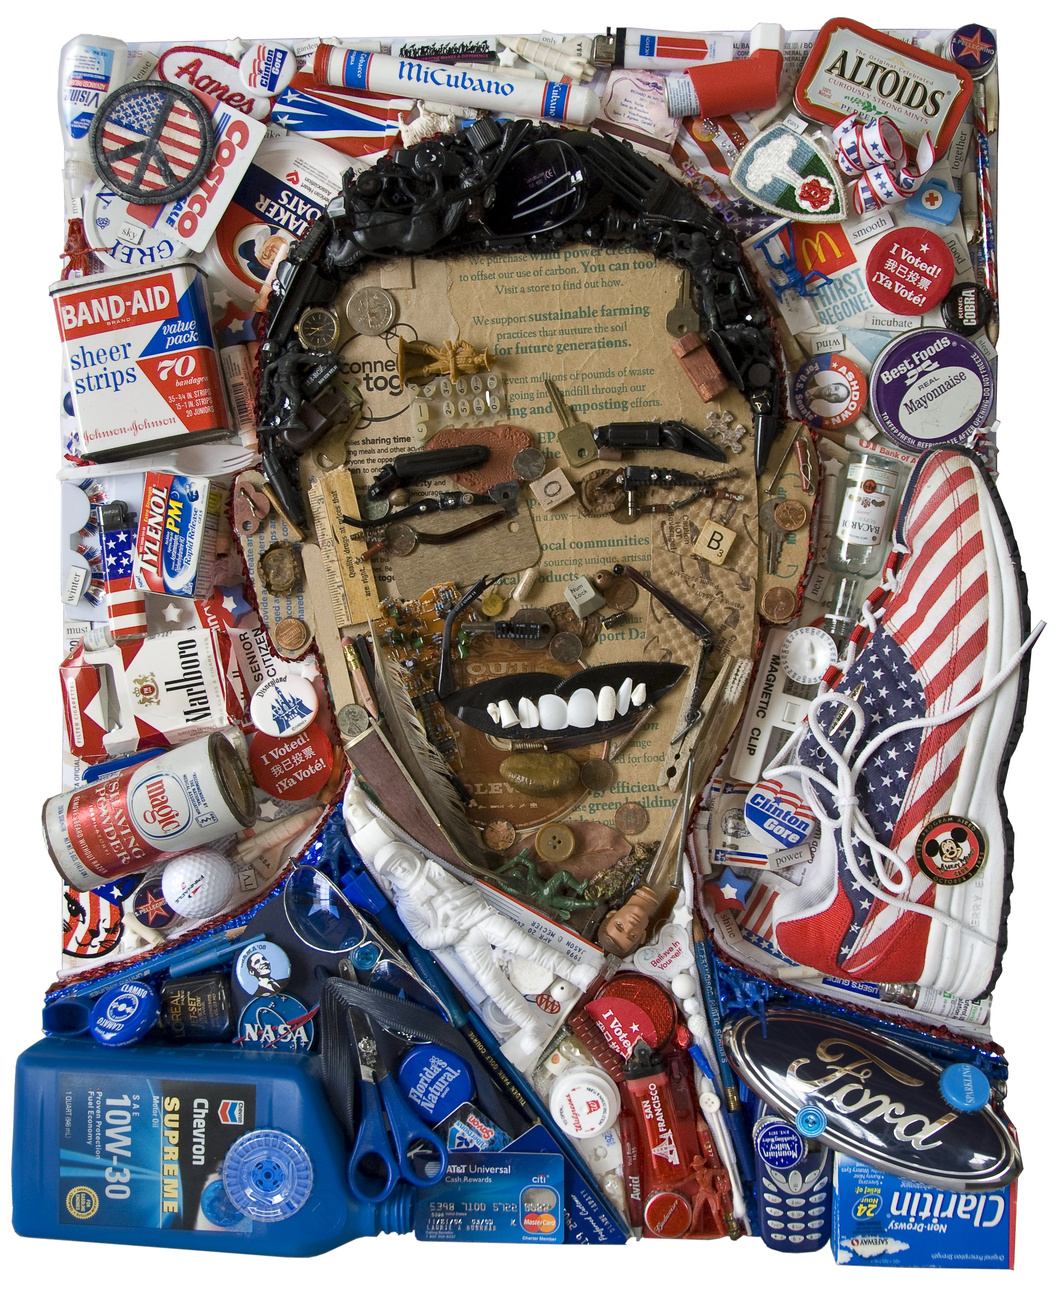 Barack Obama ismert amerikai termékekből